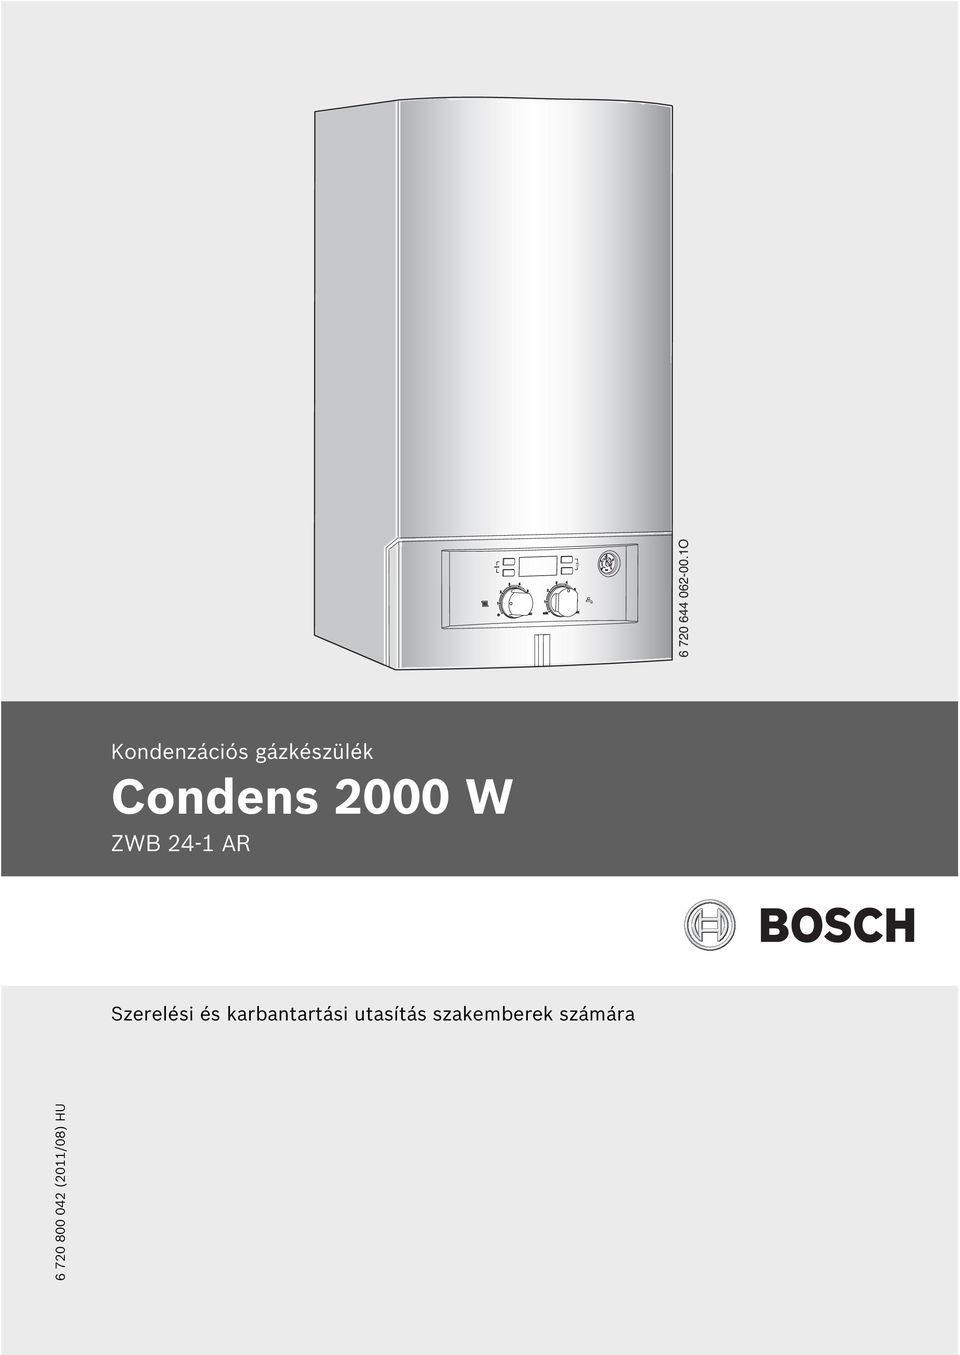 Condens 2000 W ZWB 24-1 AR